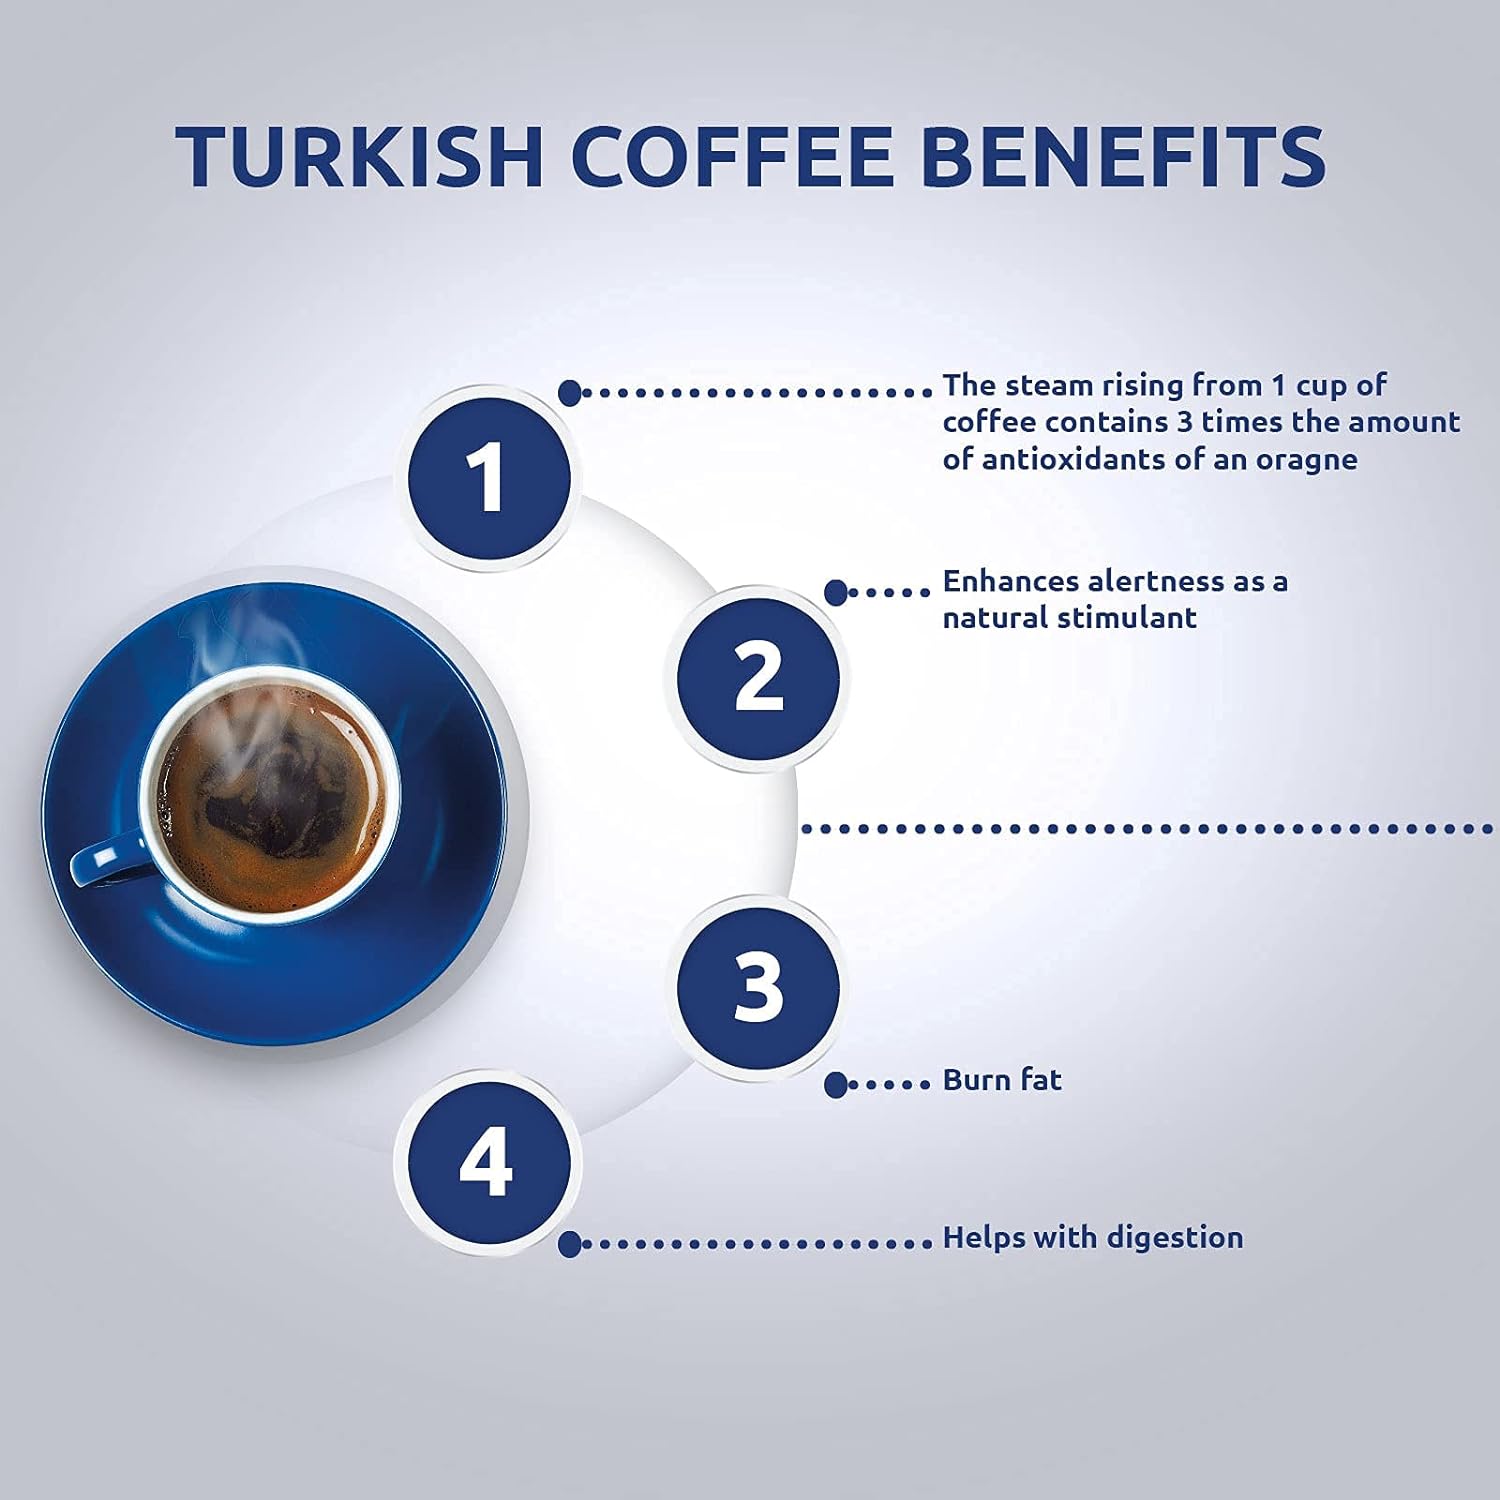 Café Najjar Turkish Coffee with Cardamom 450g - Mideast Grocers